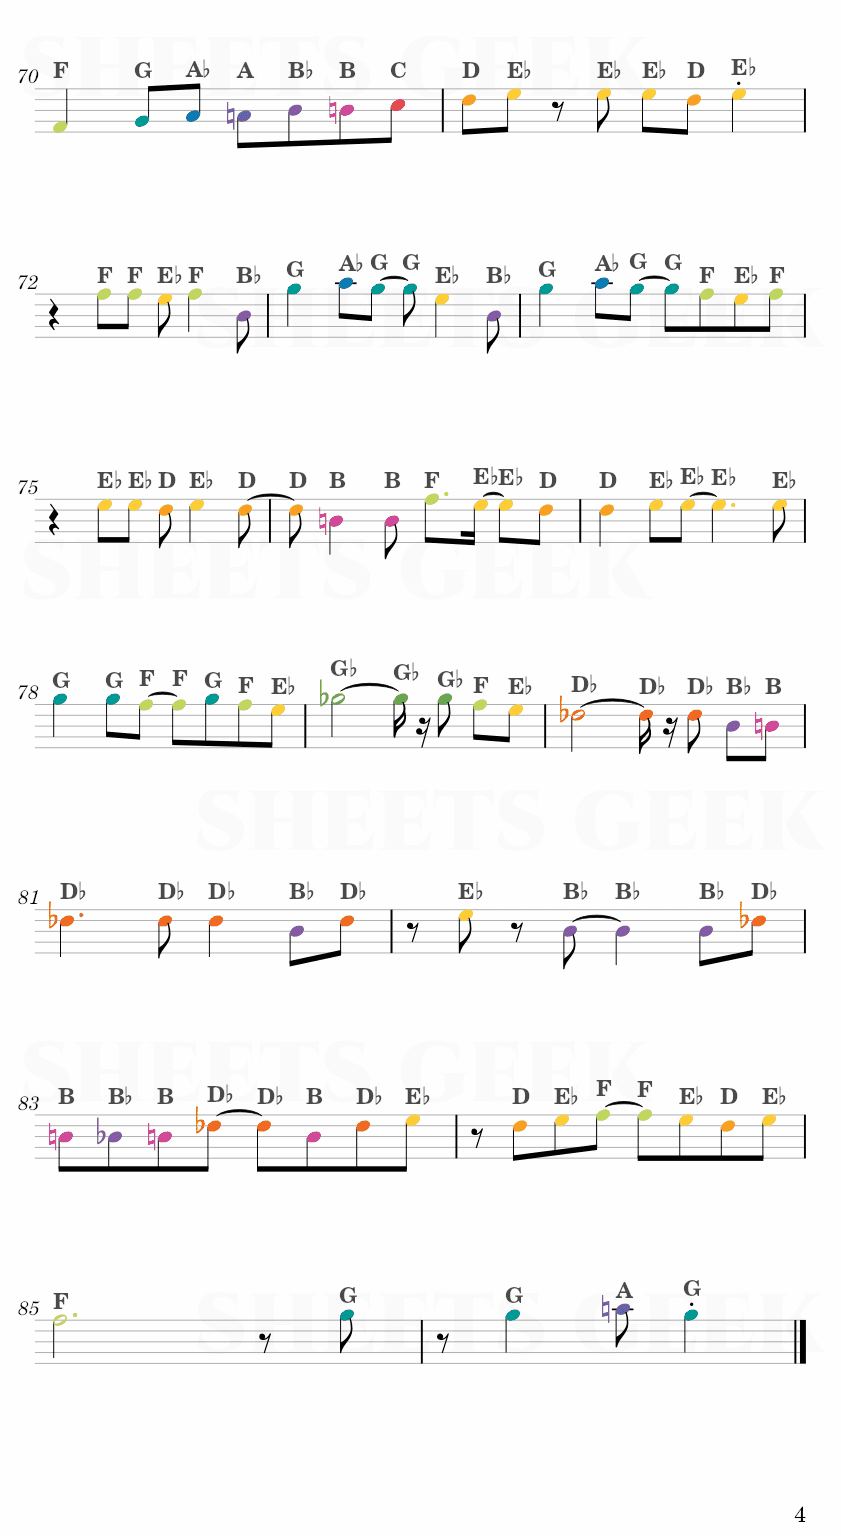 Hare Hare Yukai - Suzumiya Haruhi Ending Easy Sheet Music Free for piano, keyboard, flute, violin, sax, cello page 4